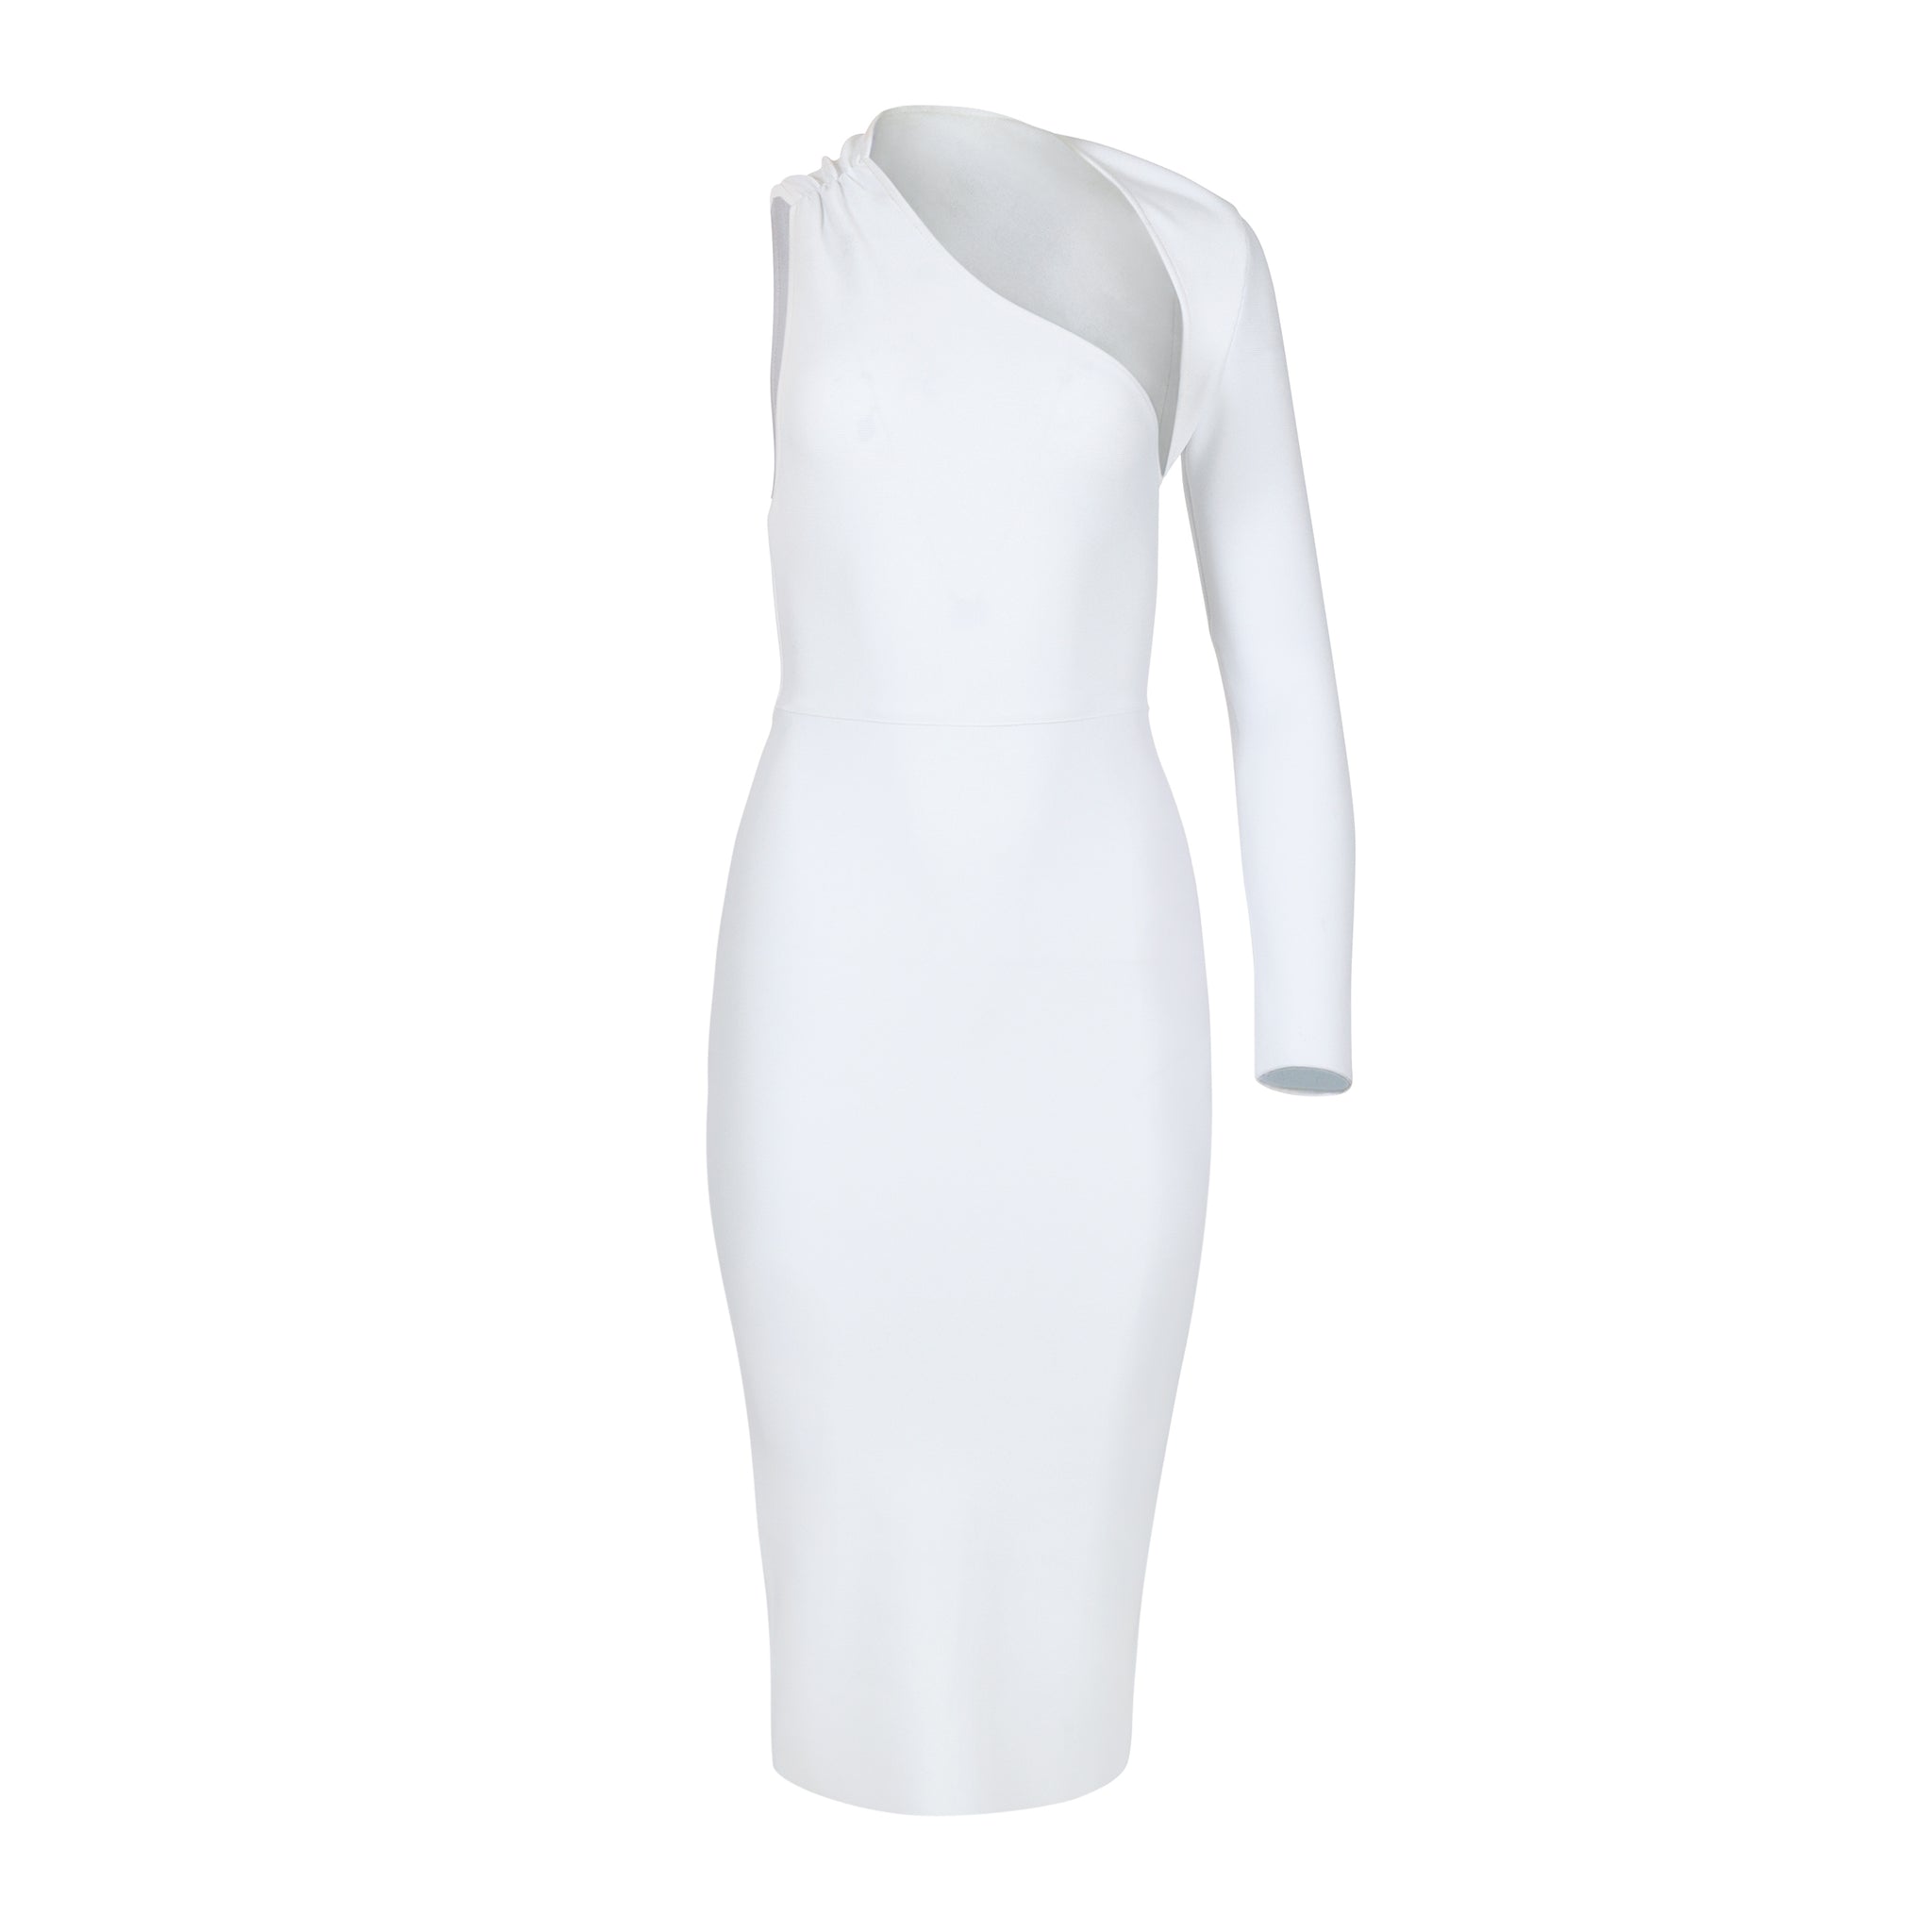 The Minimal Canon White One Sleeve Supreme Luxury Dress